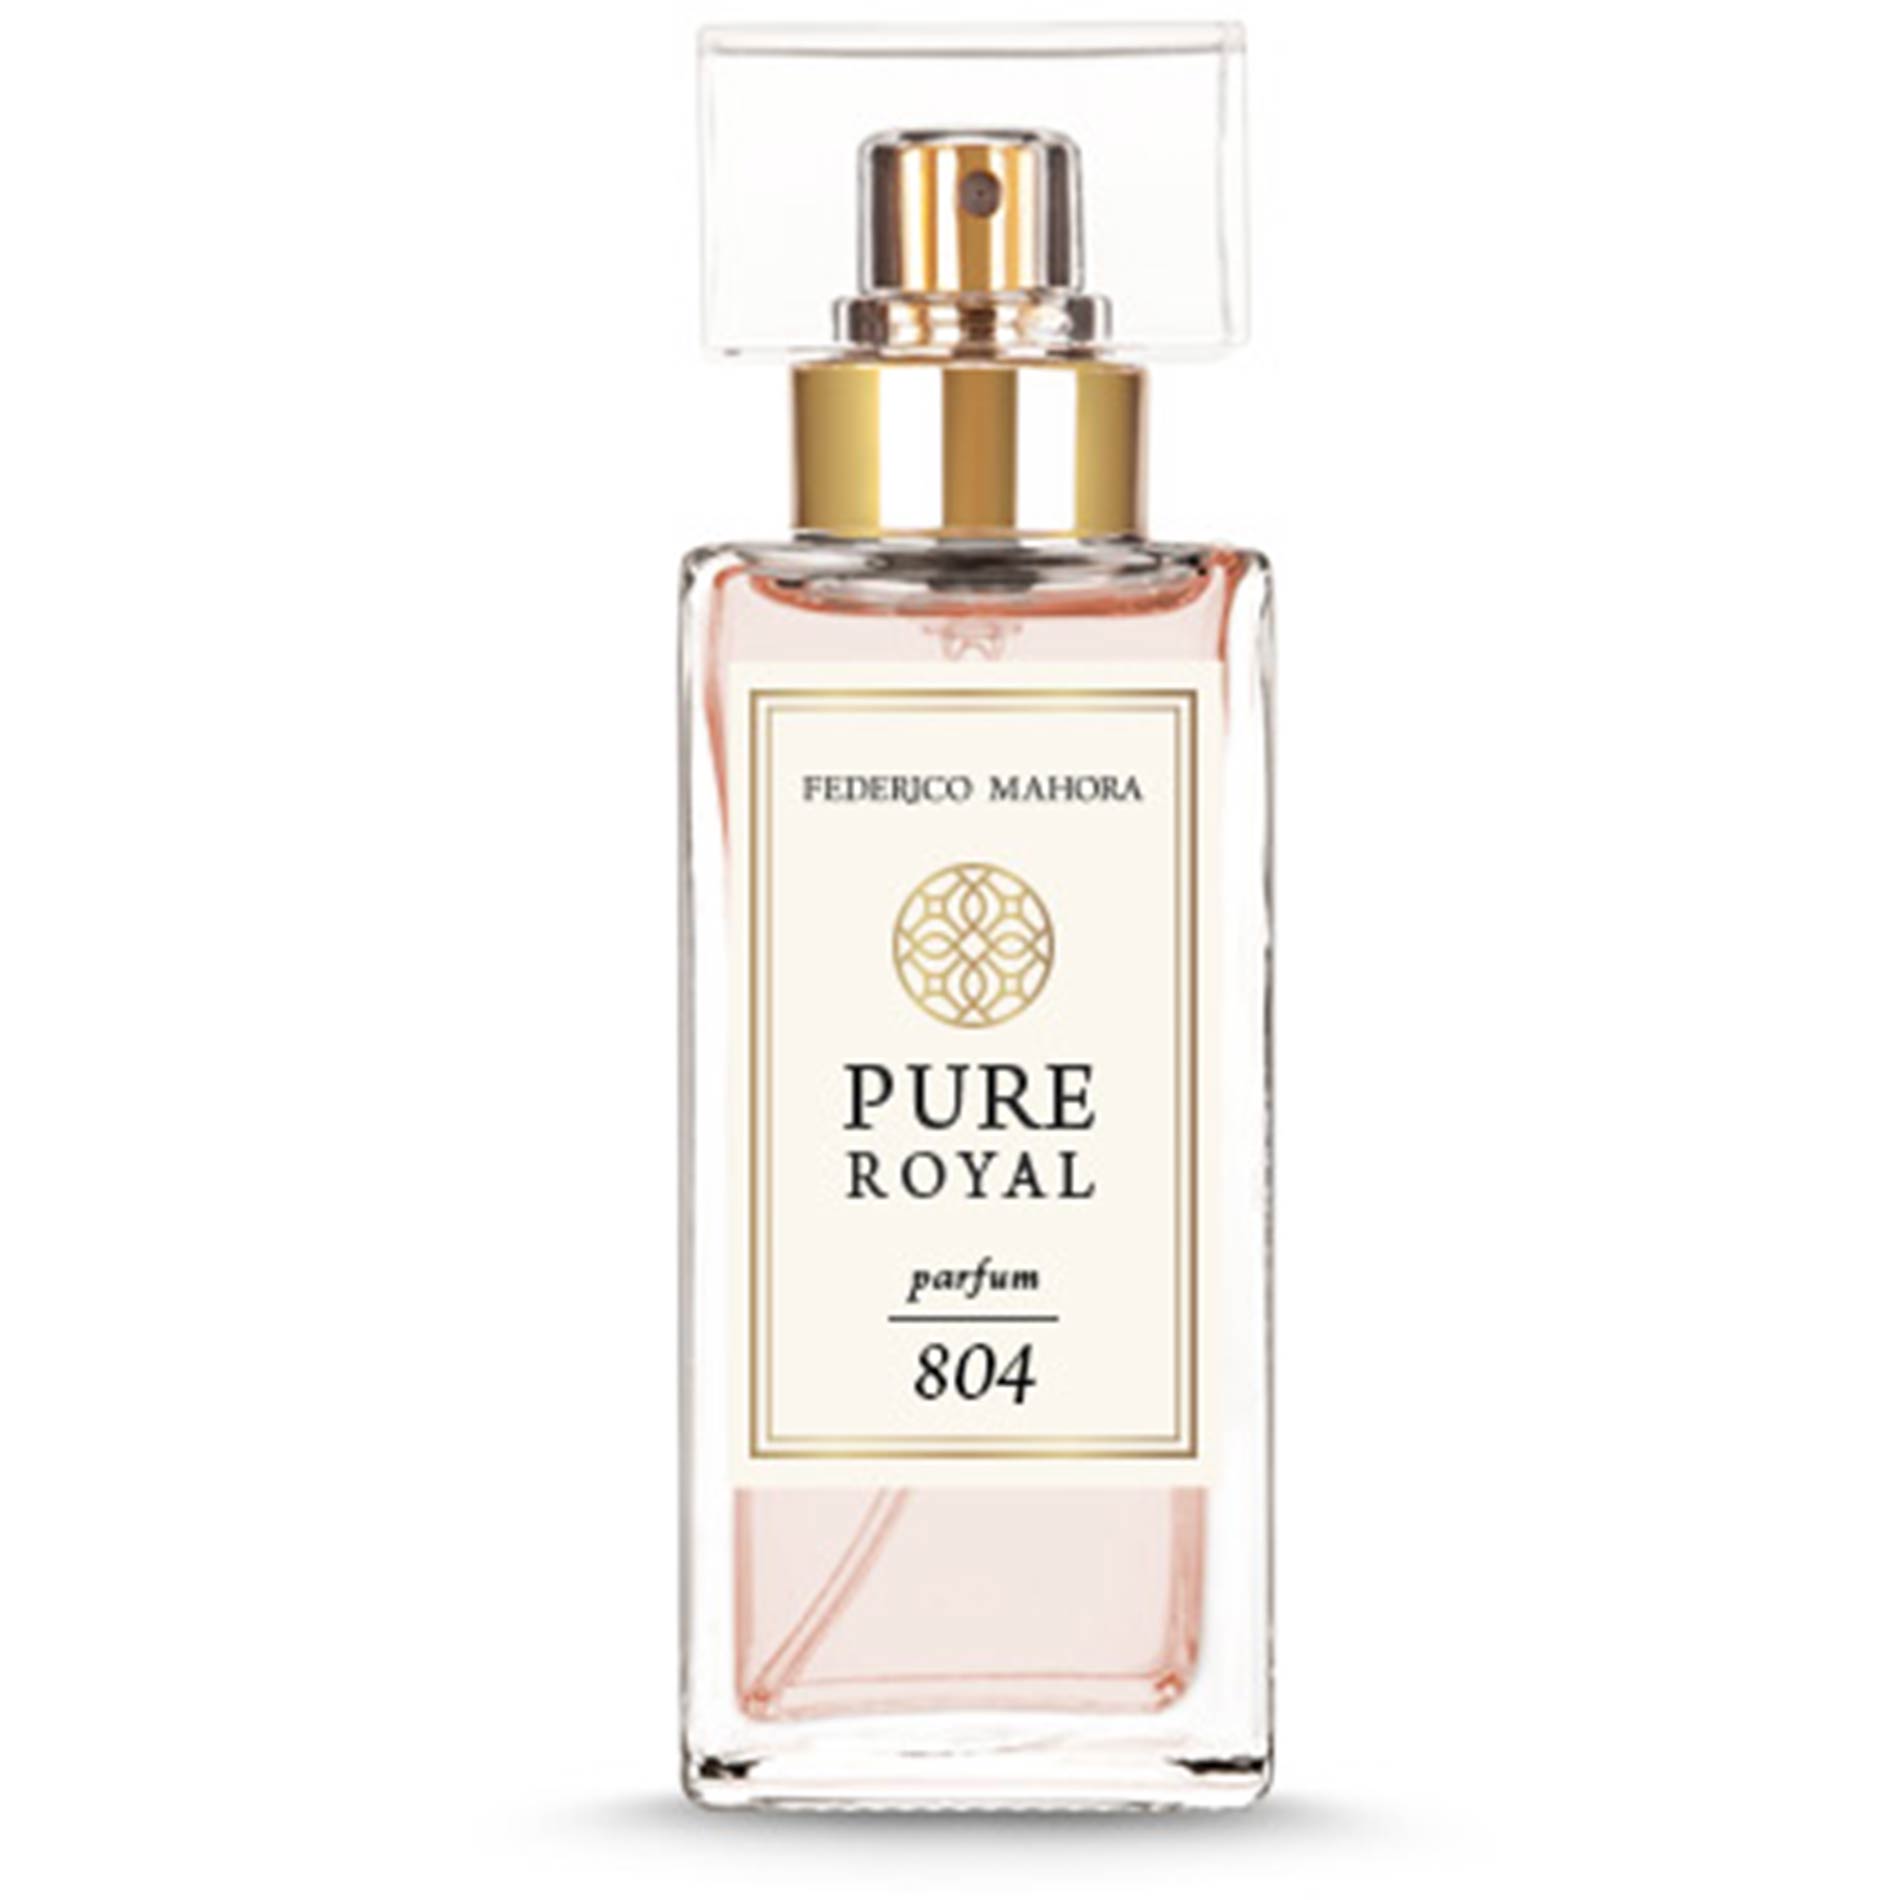 PURE ROYAL 804 Parfum by Federico Mahora